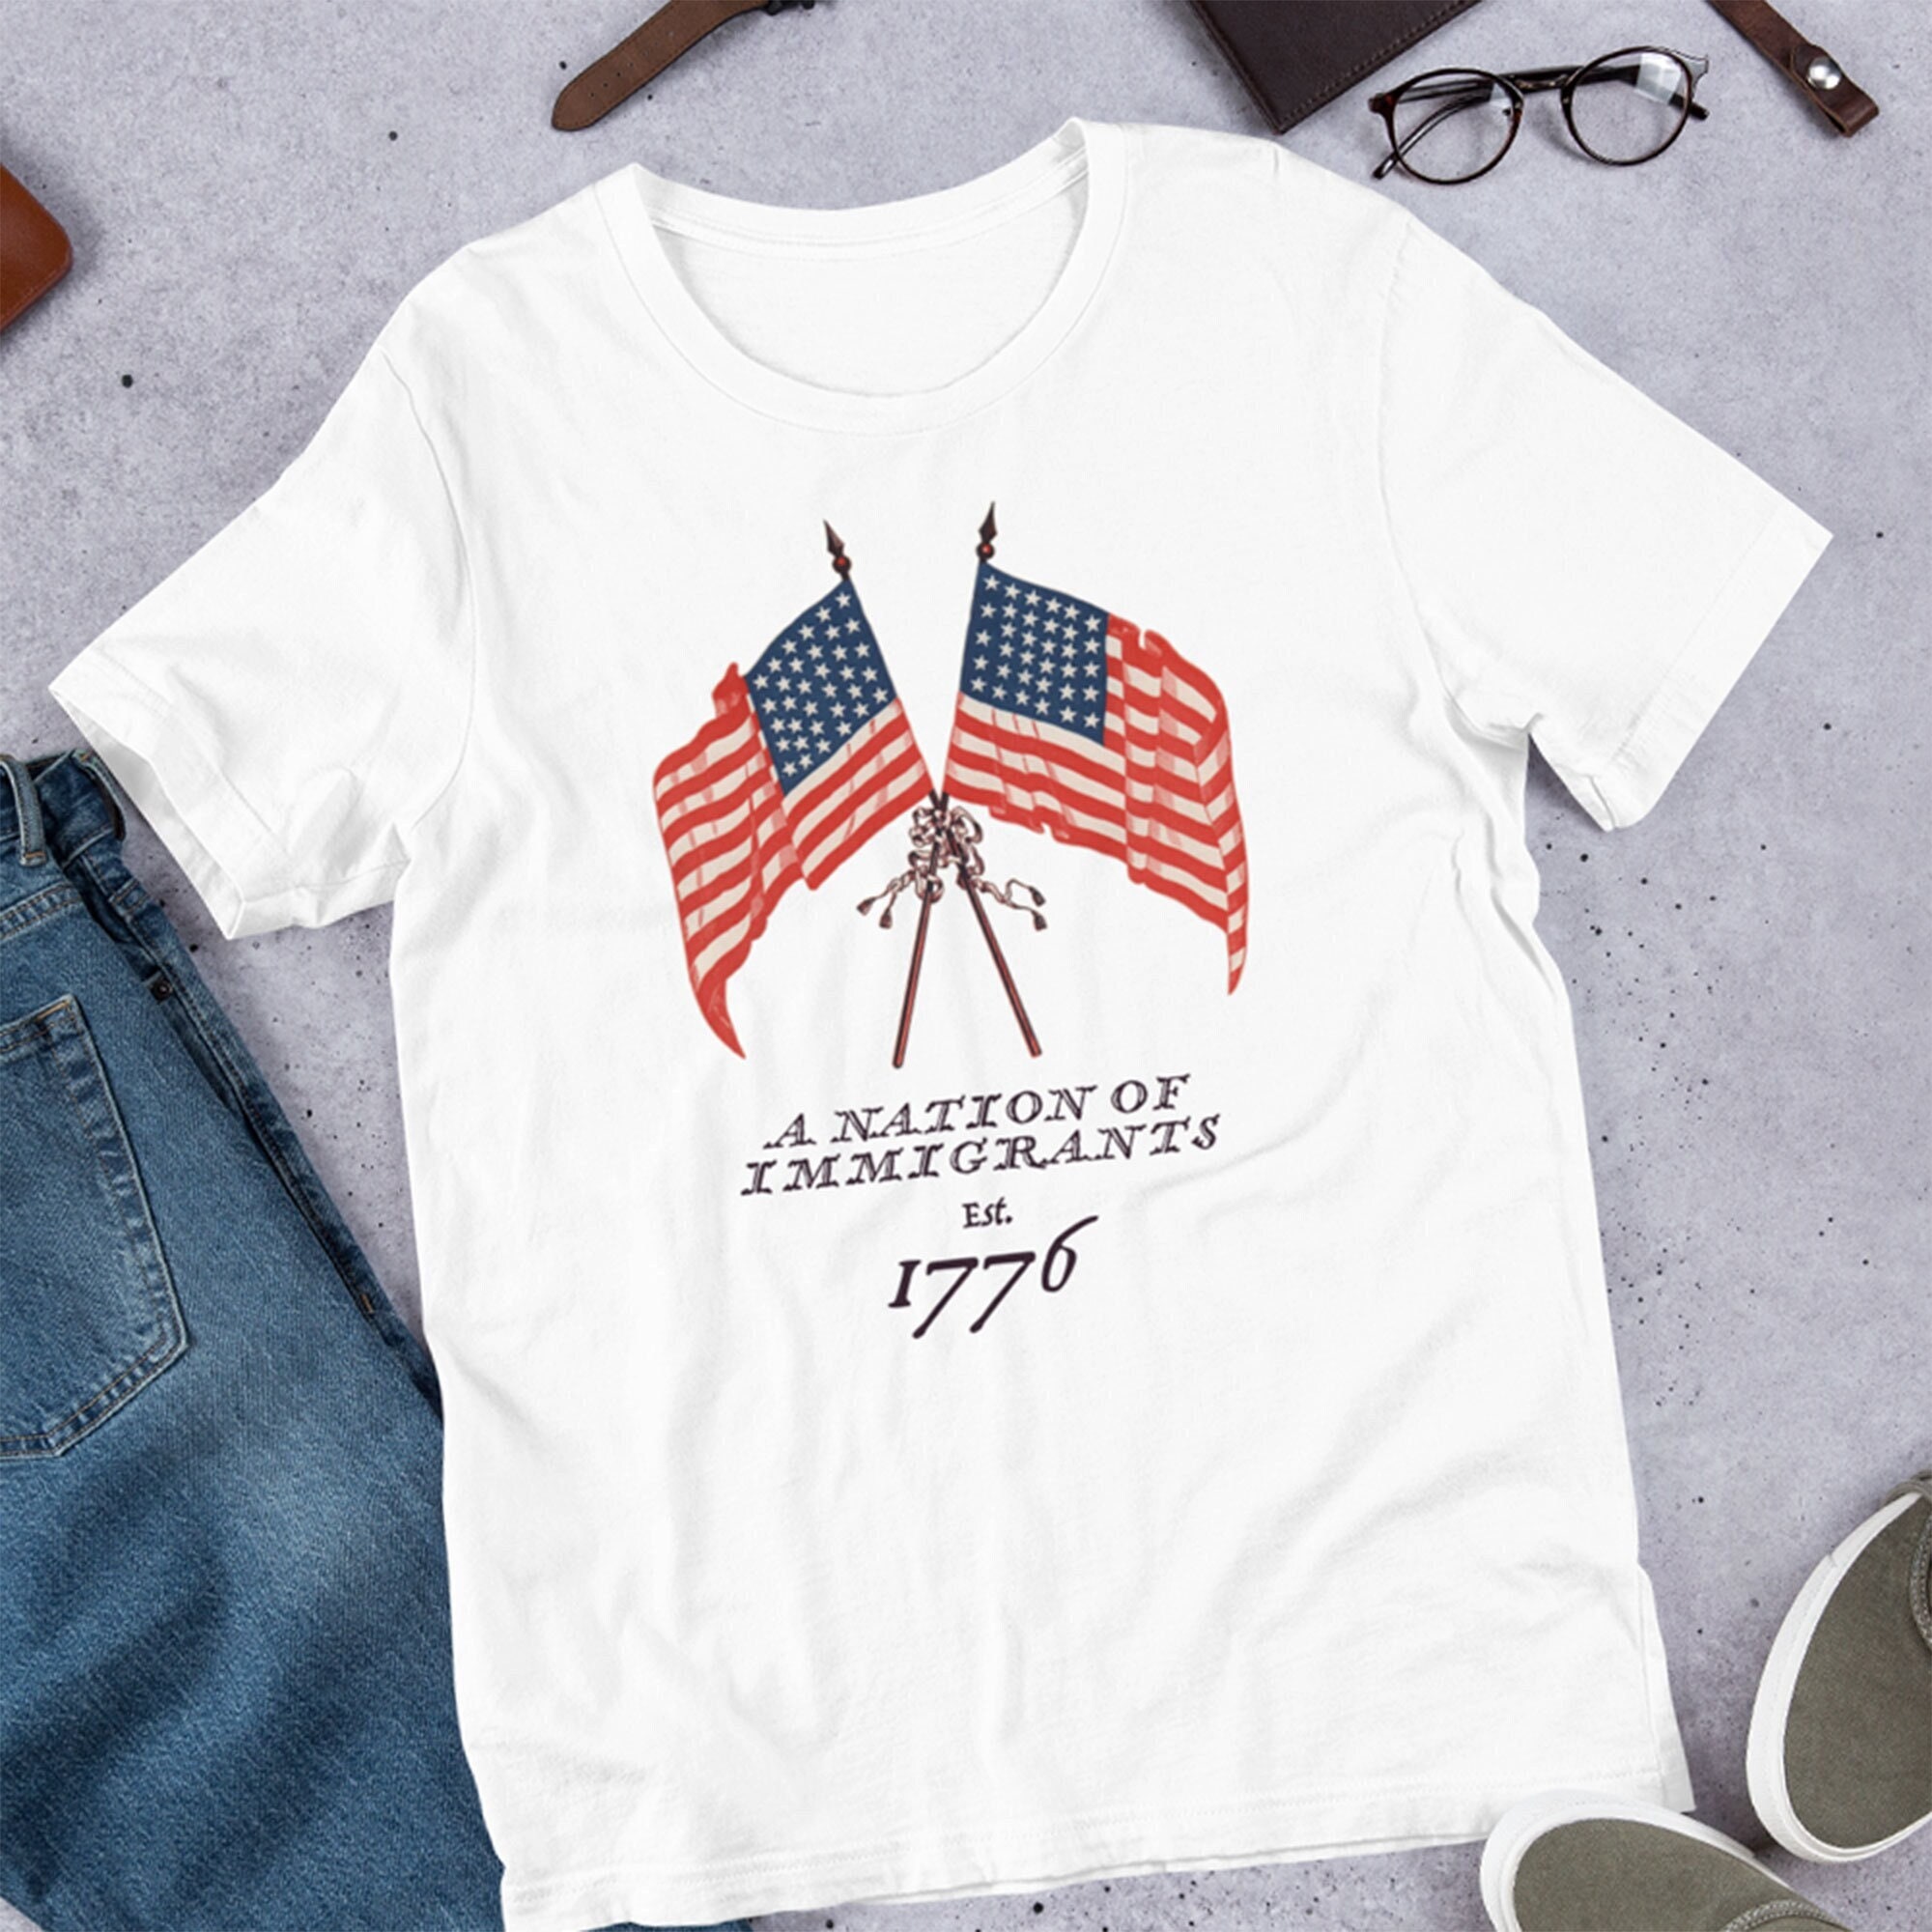 Fearless Patriot T-Shirt - Men's - Rogue Nation 1776